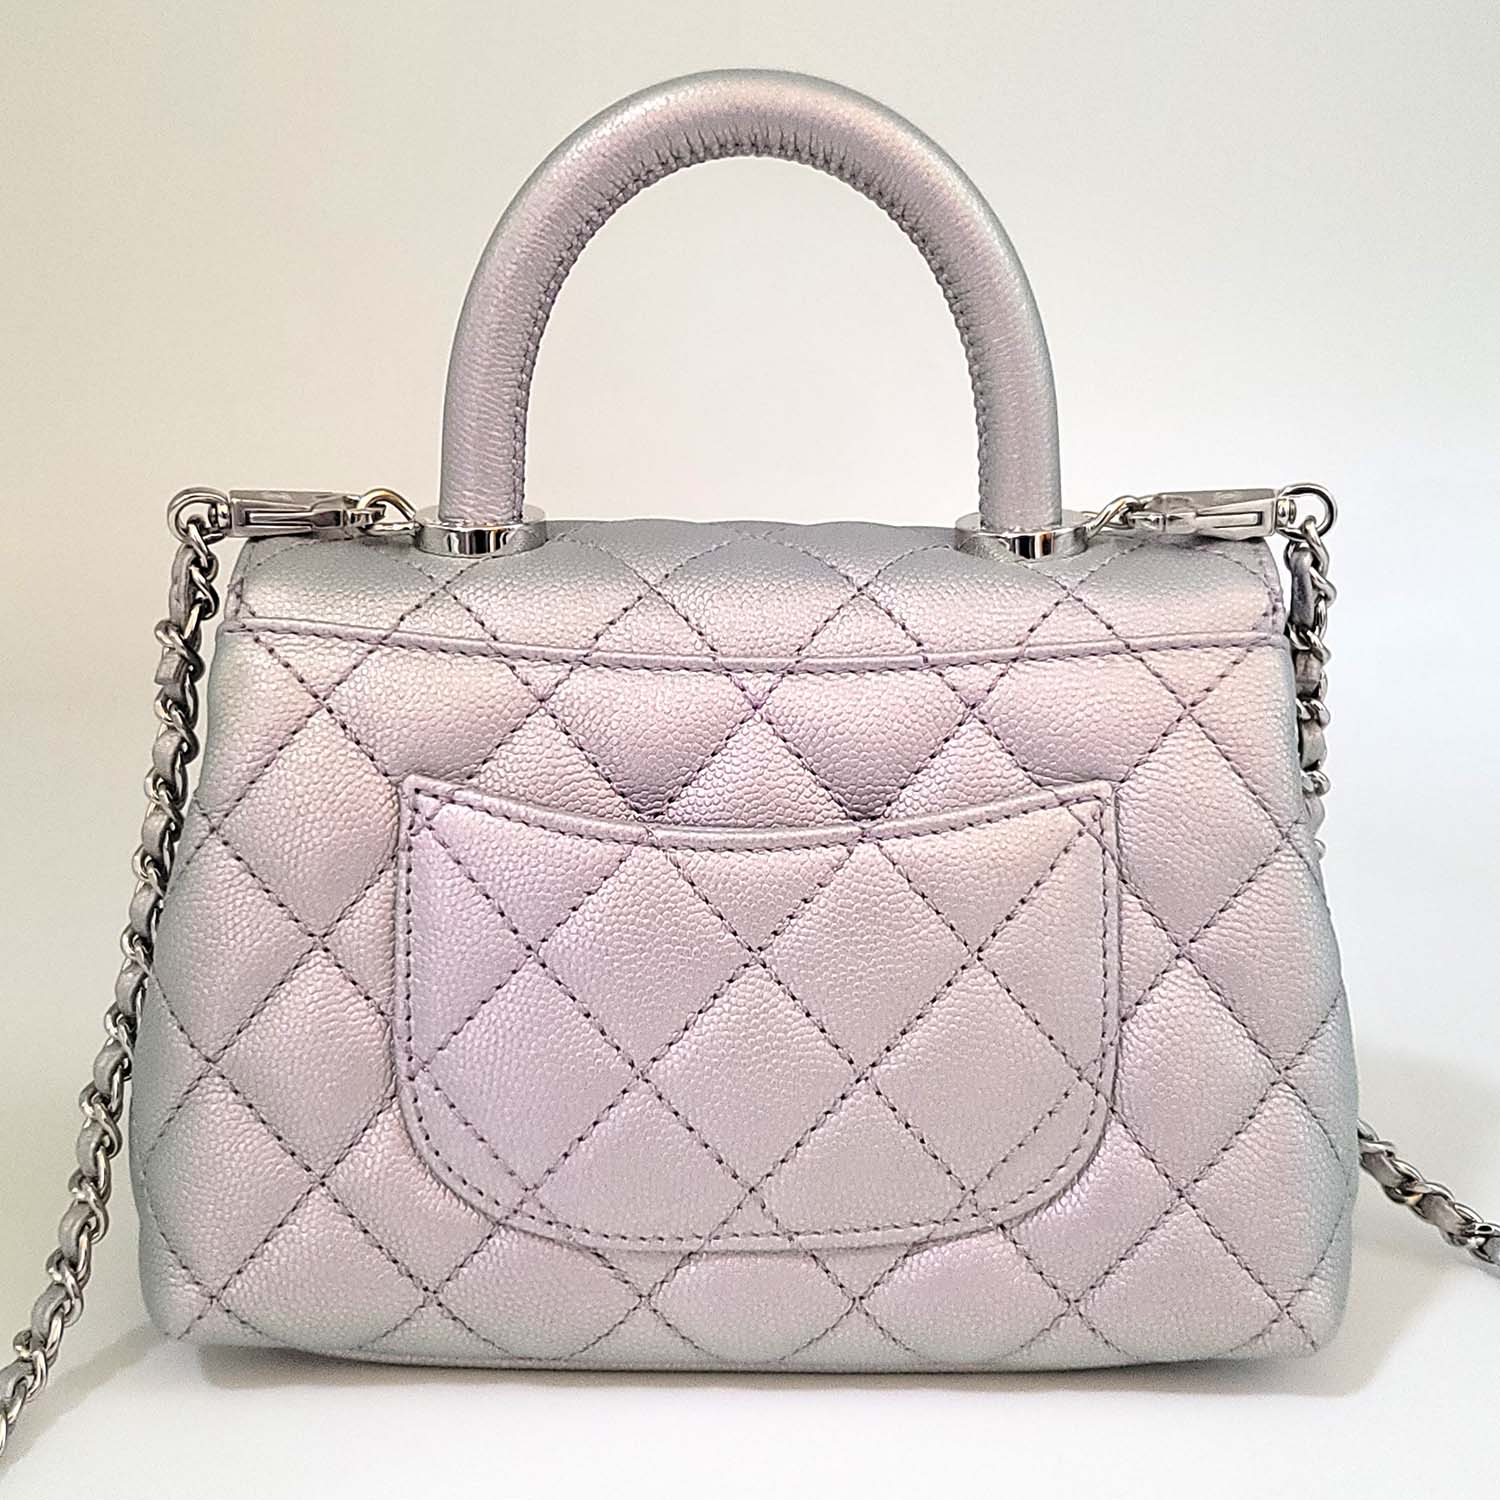 Chanel Small Iridescent Coco Handle Bag